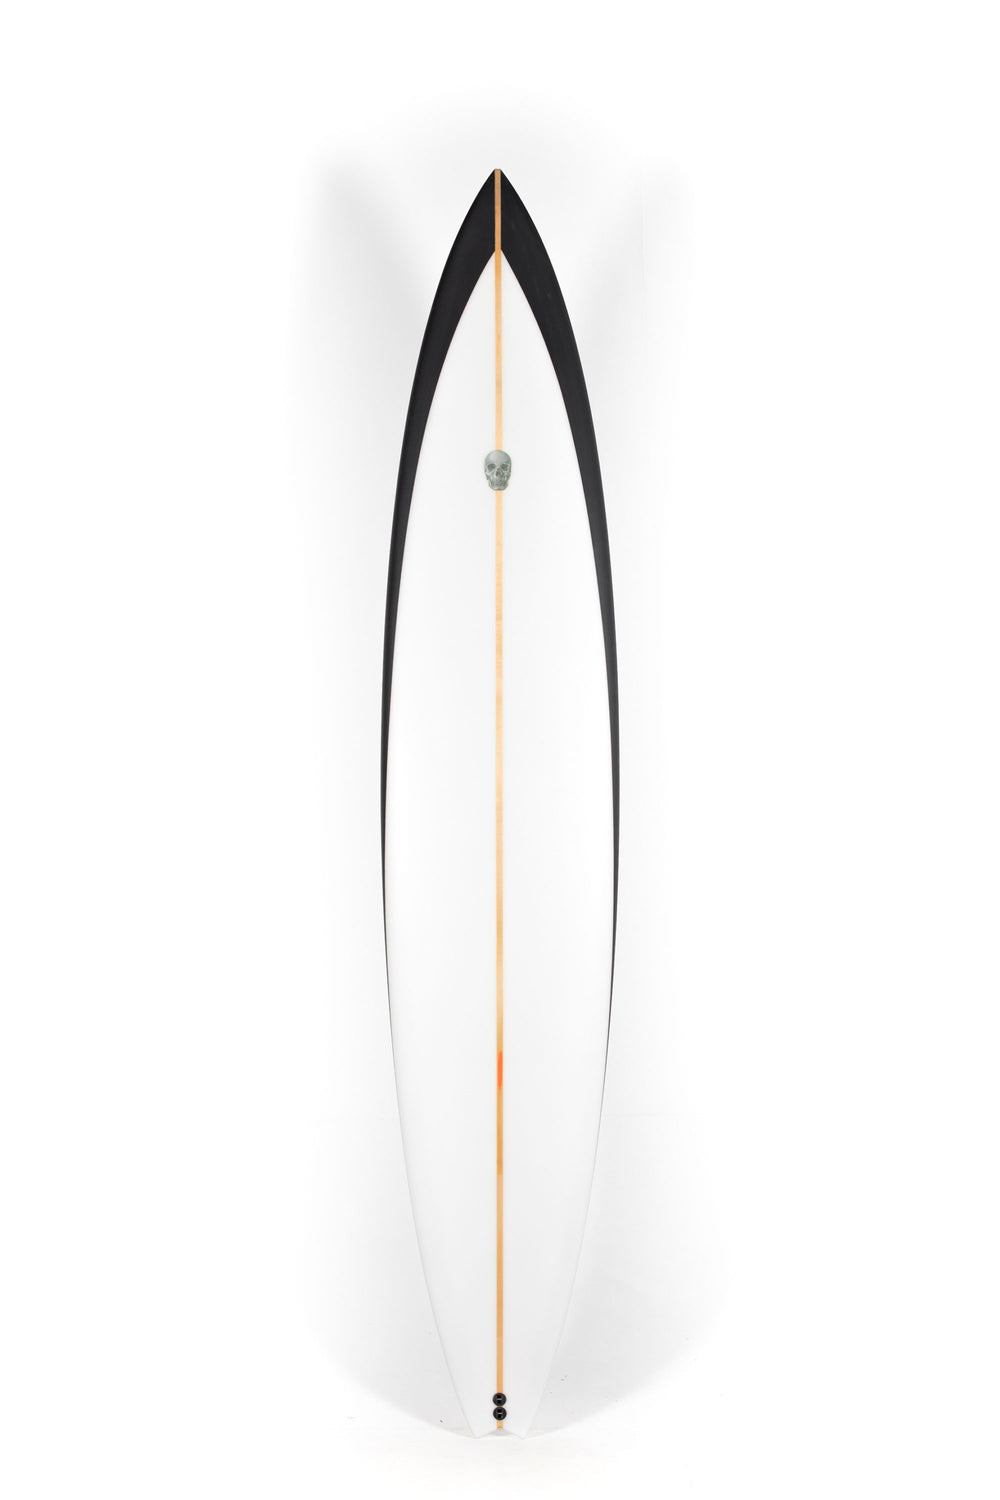 Pukas Surf Shop - Christenson Surfboards - SICARIO - 8'6